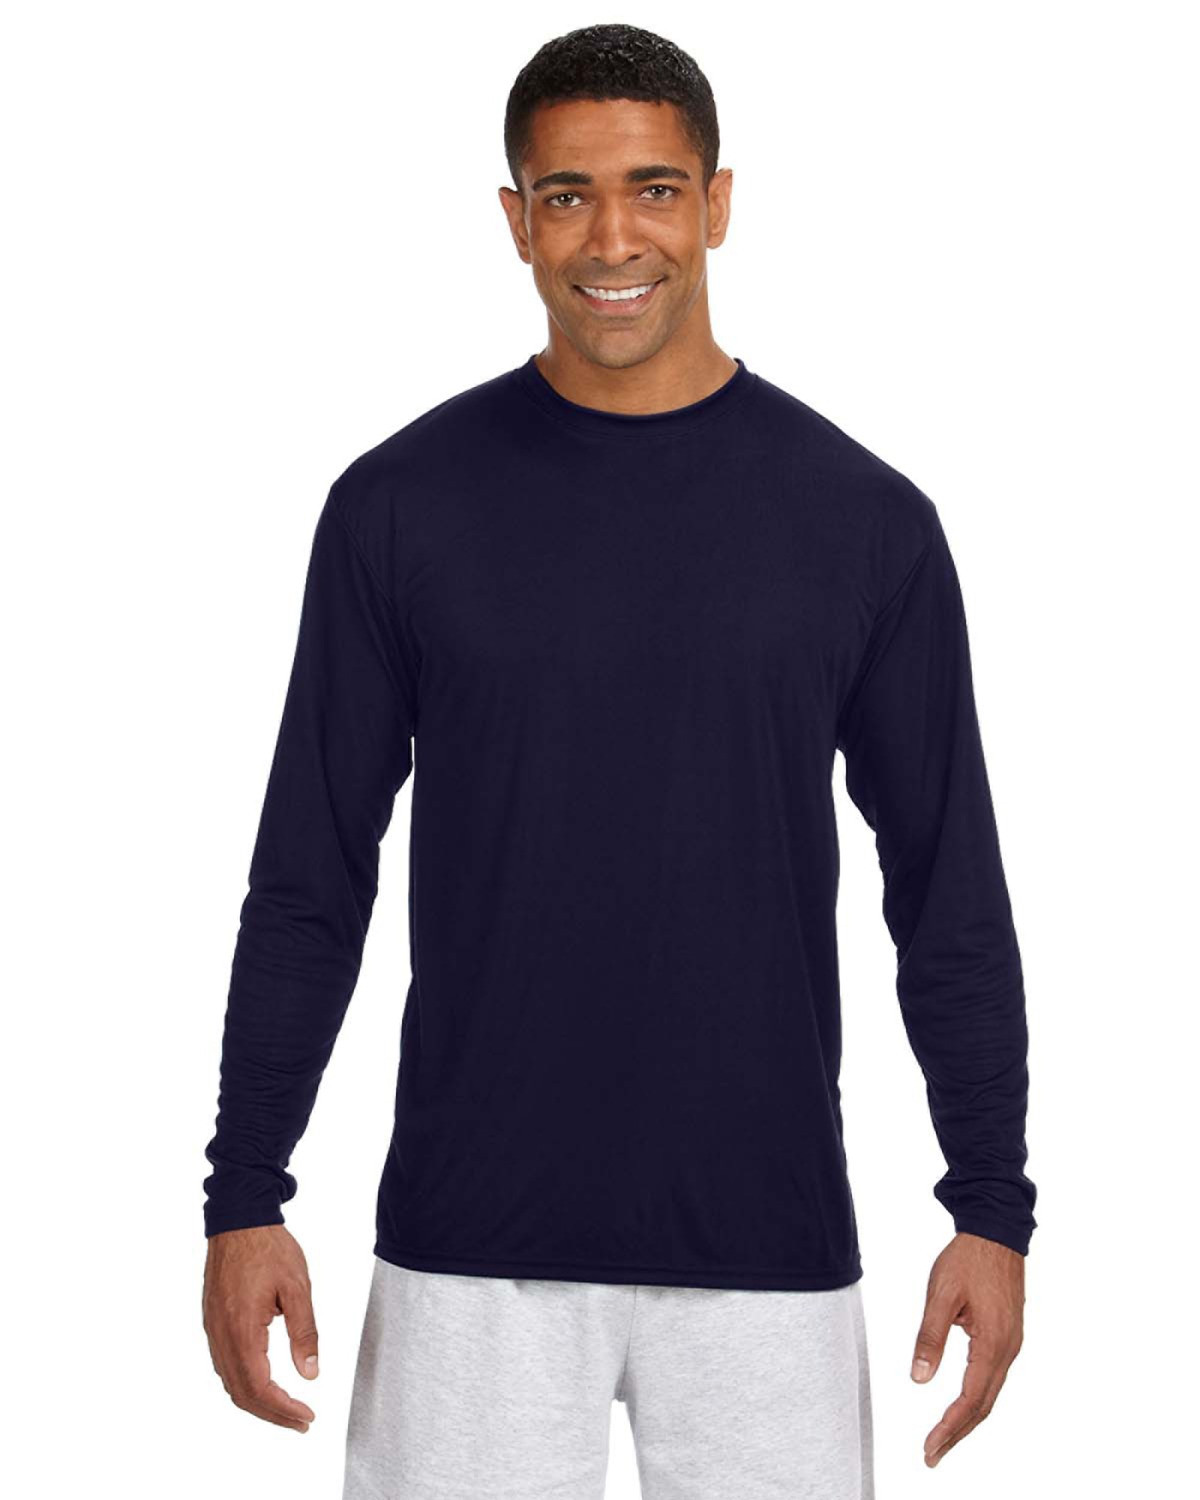 Distressed Black Jersey Layered Long Sleeve T-Shirt